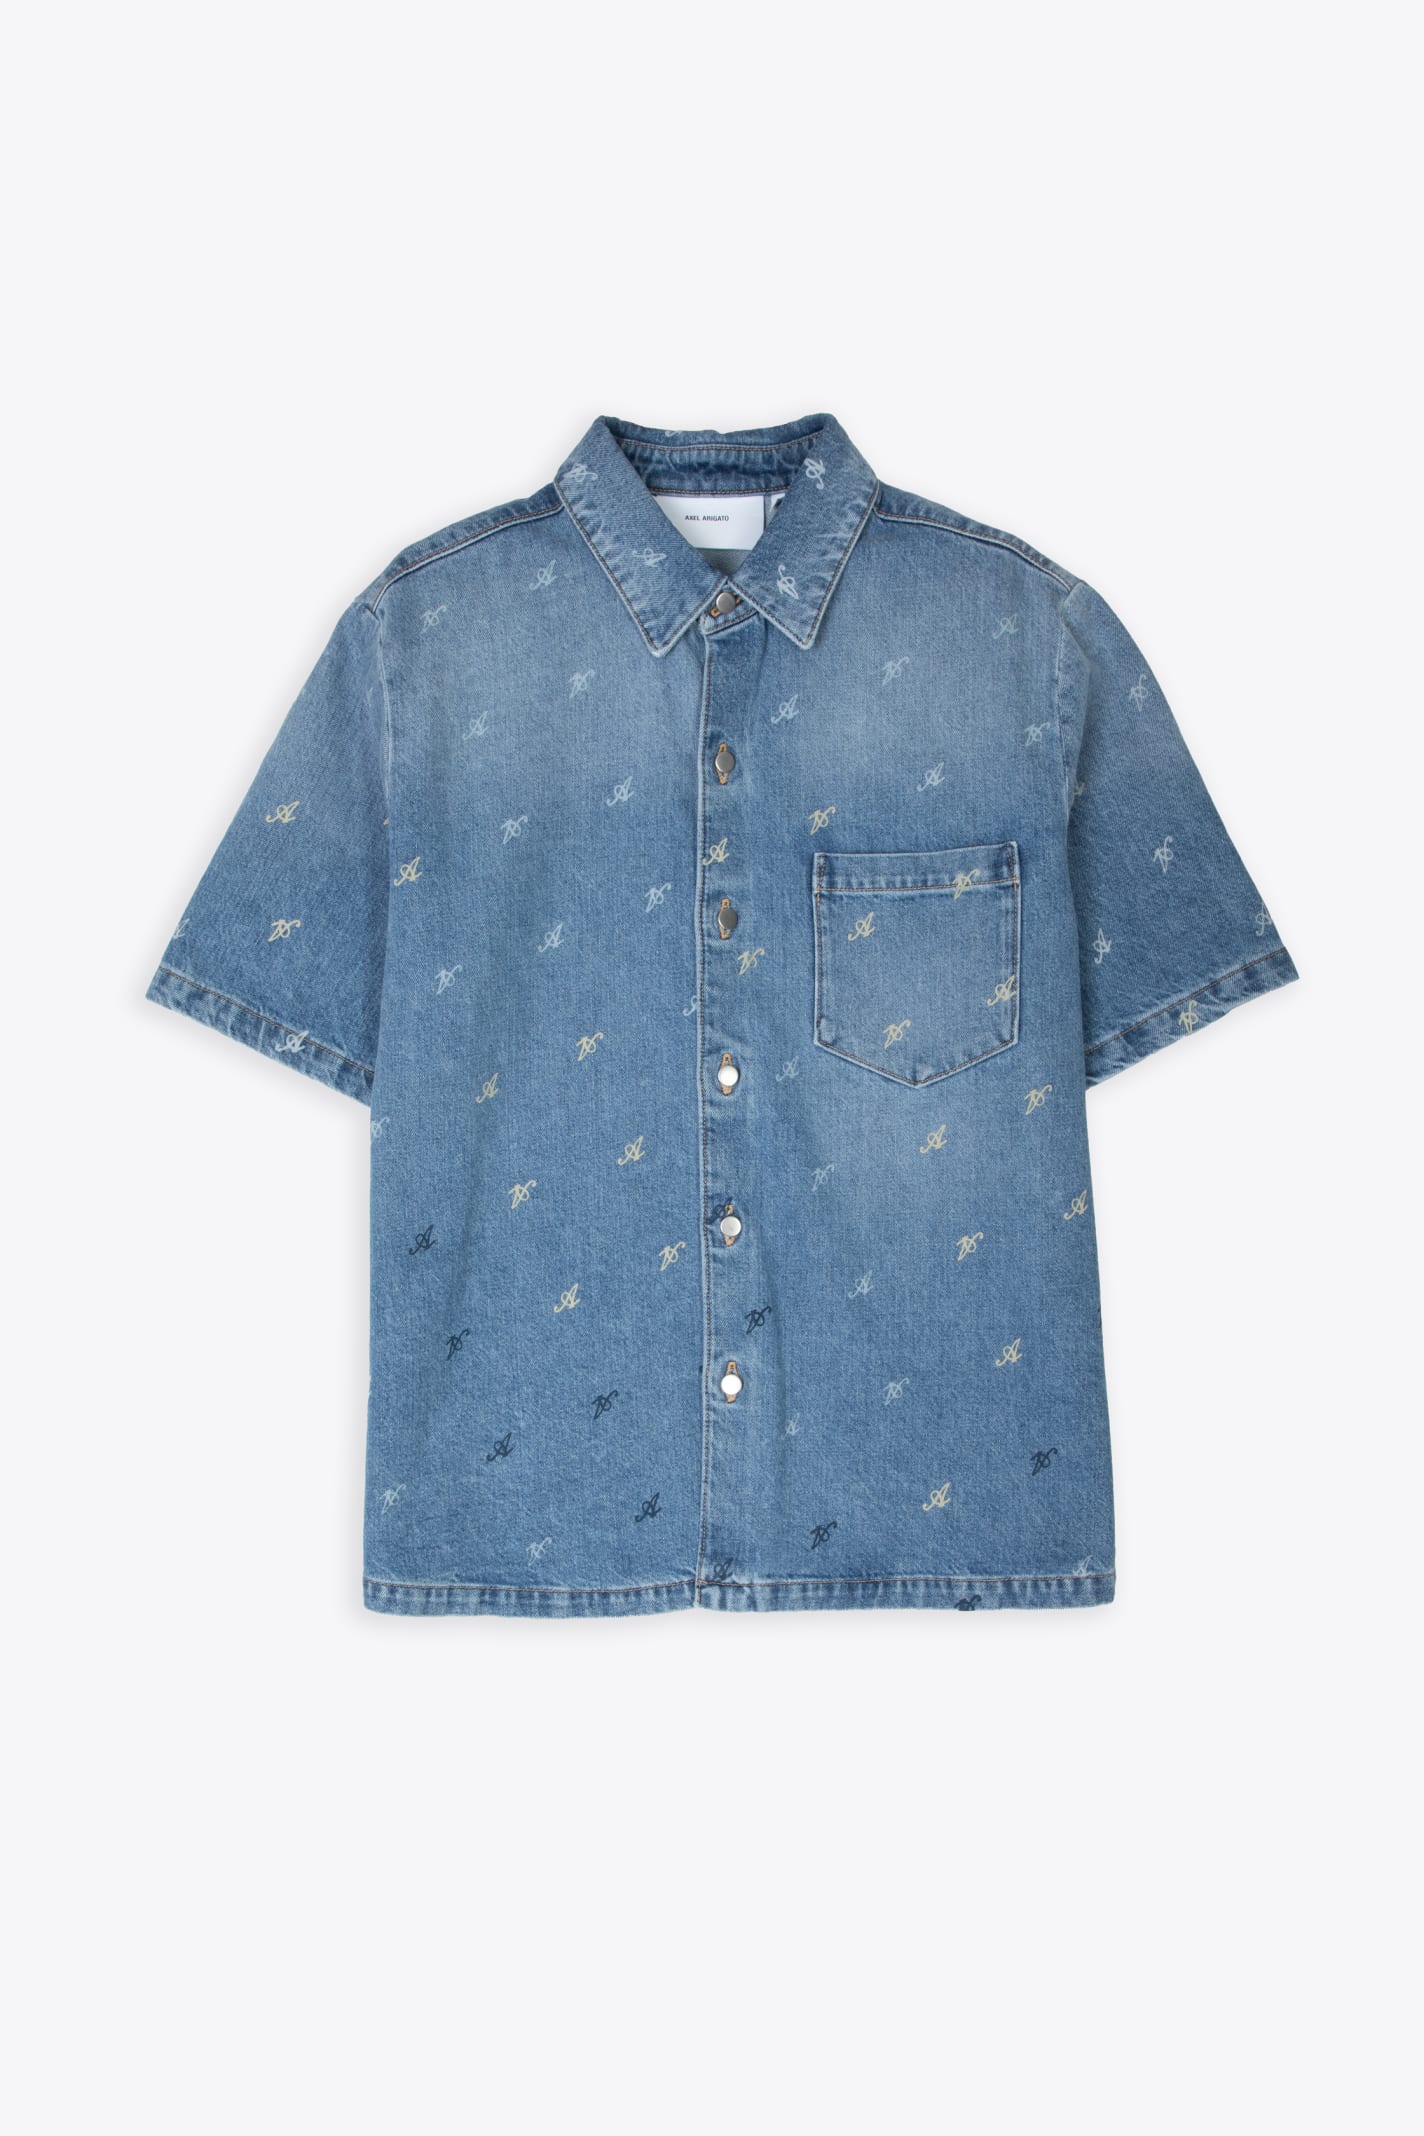 Miles Shirt Light blue denim shirt with short sleeves - Miles Shirt